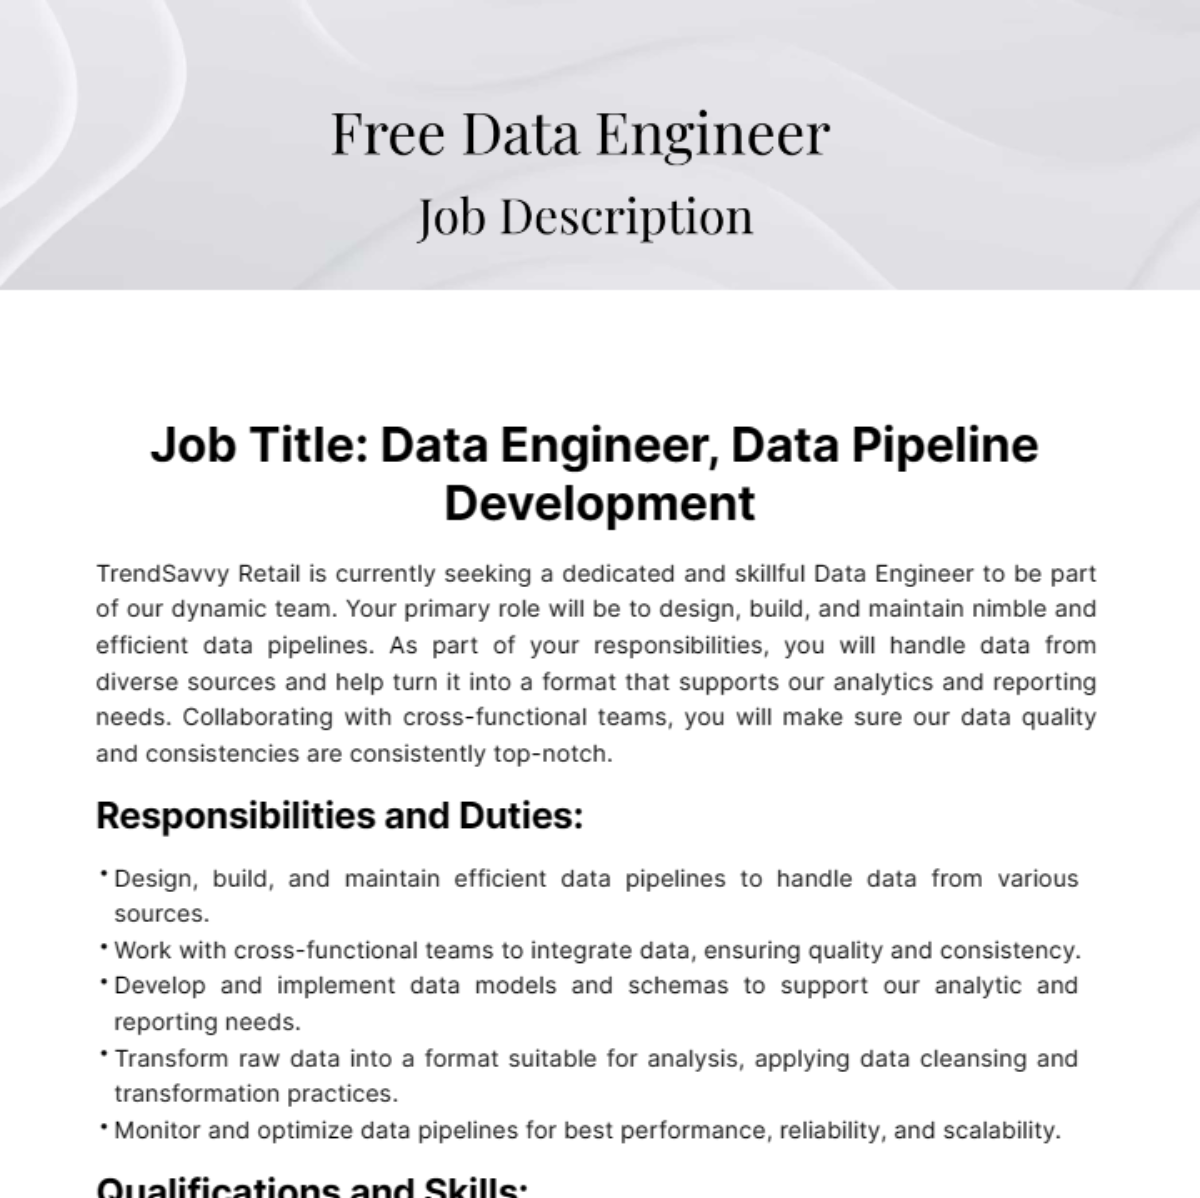 Free Data Engineer Job Description Template